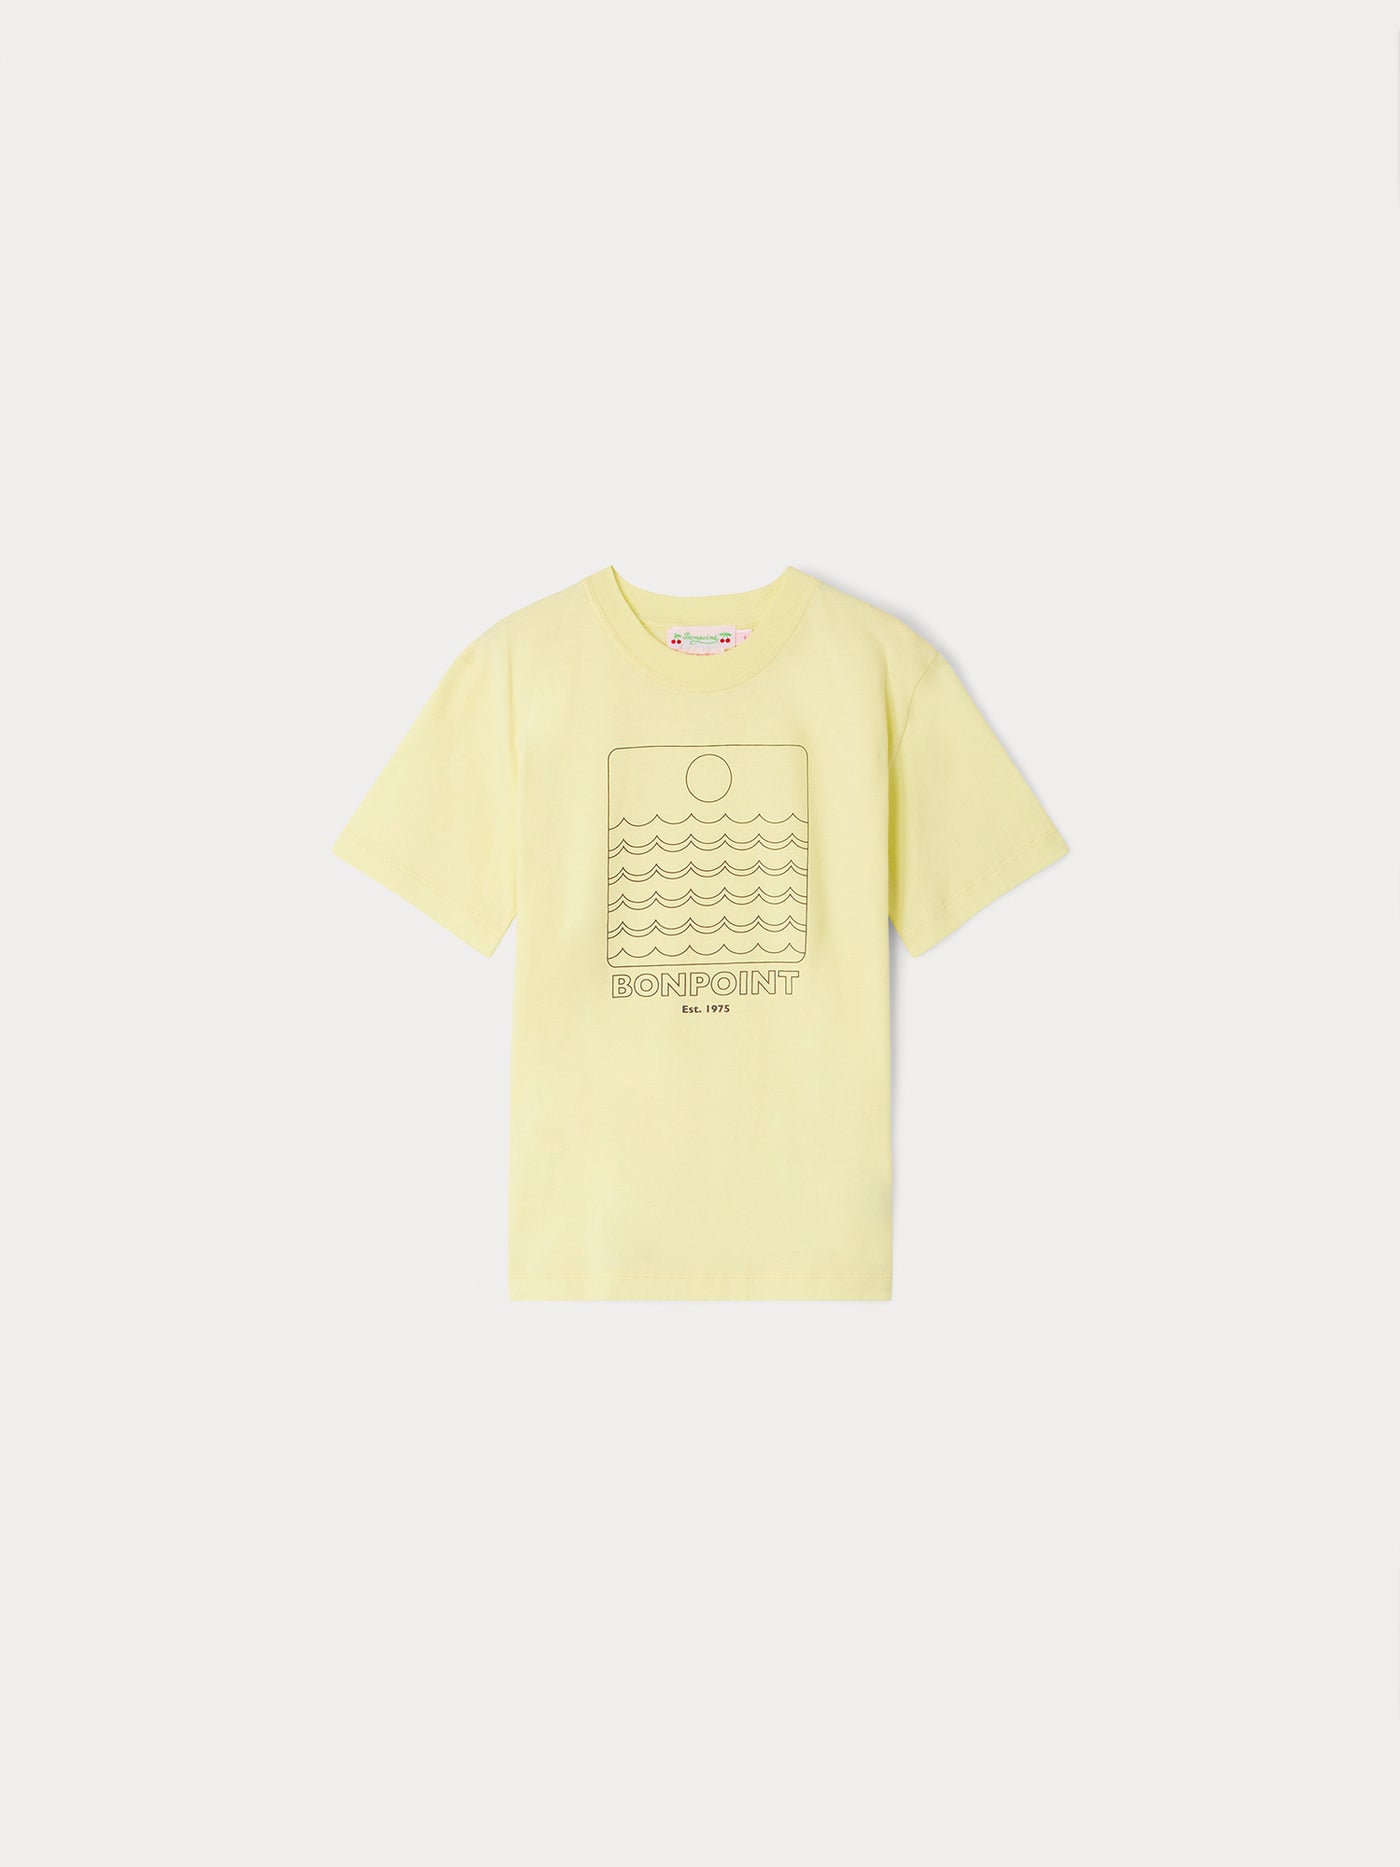 Thibald T-shirt light yellow